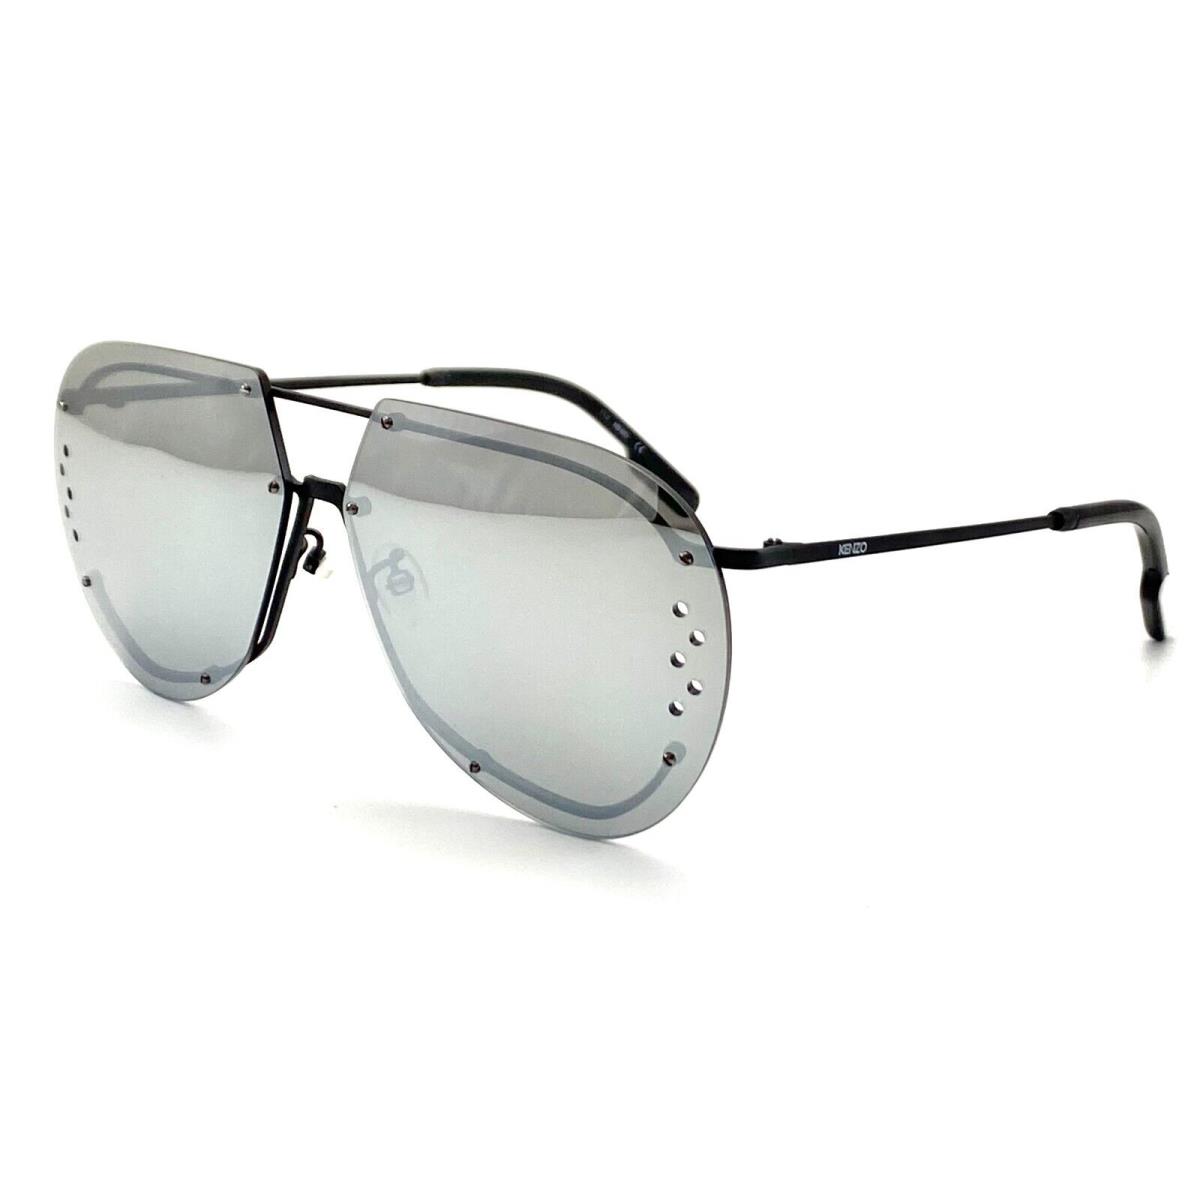 Kenzo Paris KZ40058U 02C Black Sunglasses 63-12 145 W/case - Black Frame, Silver Lens